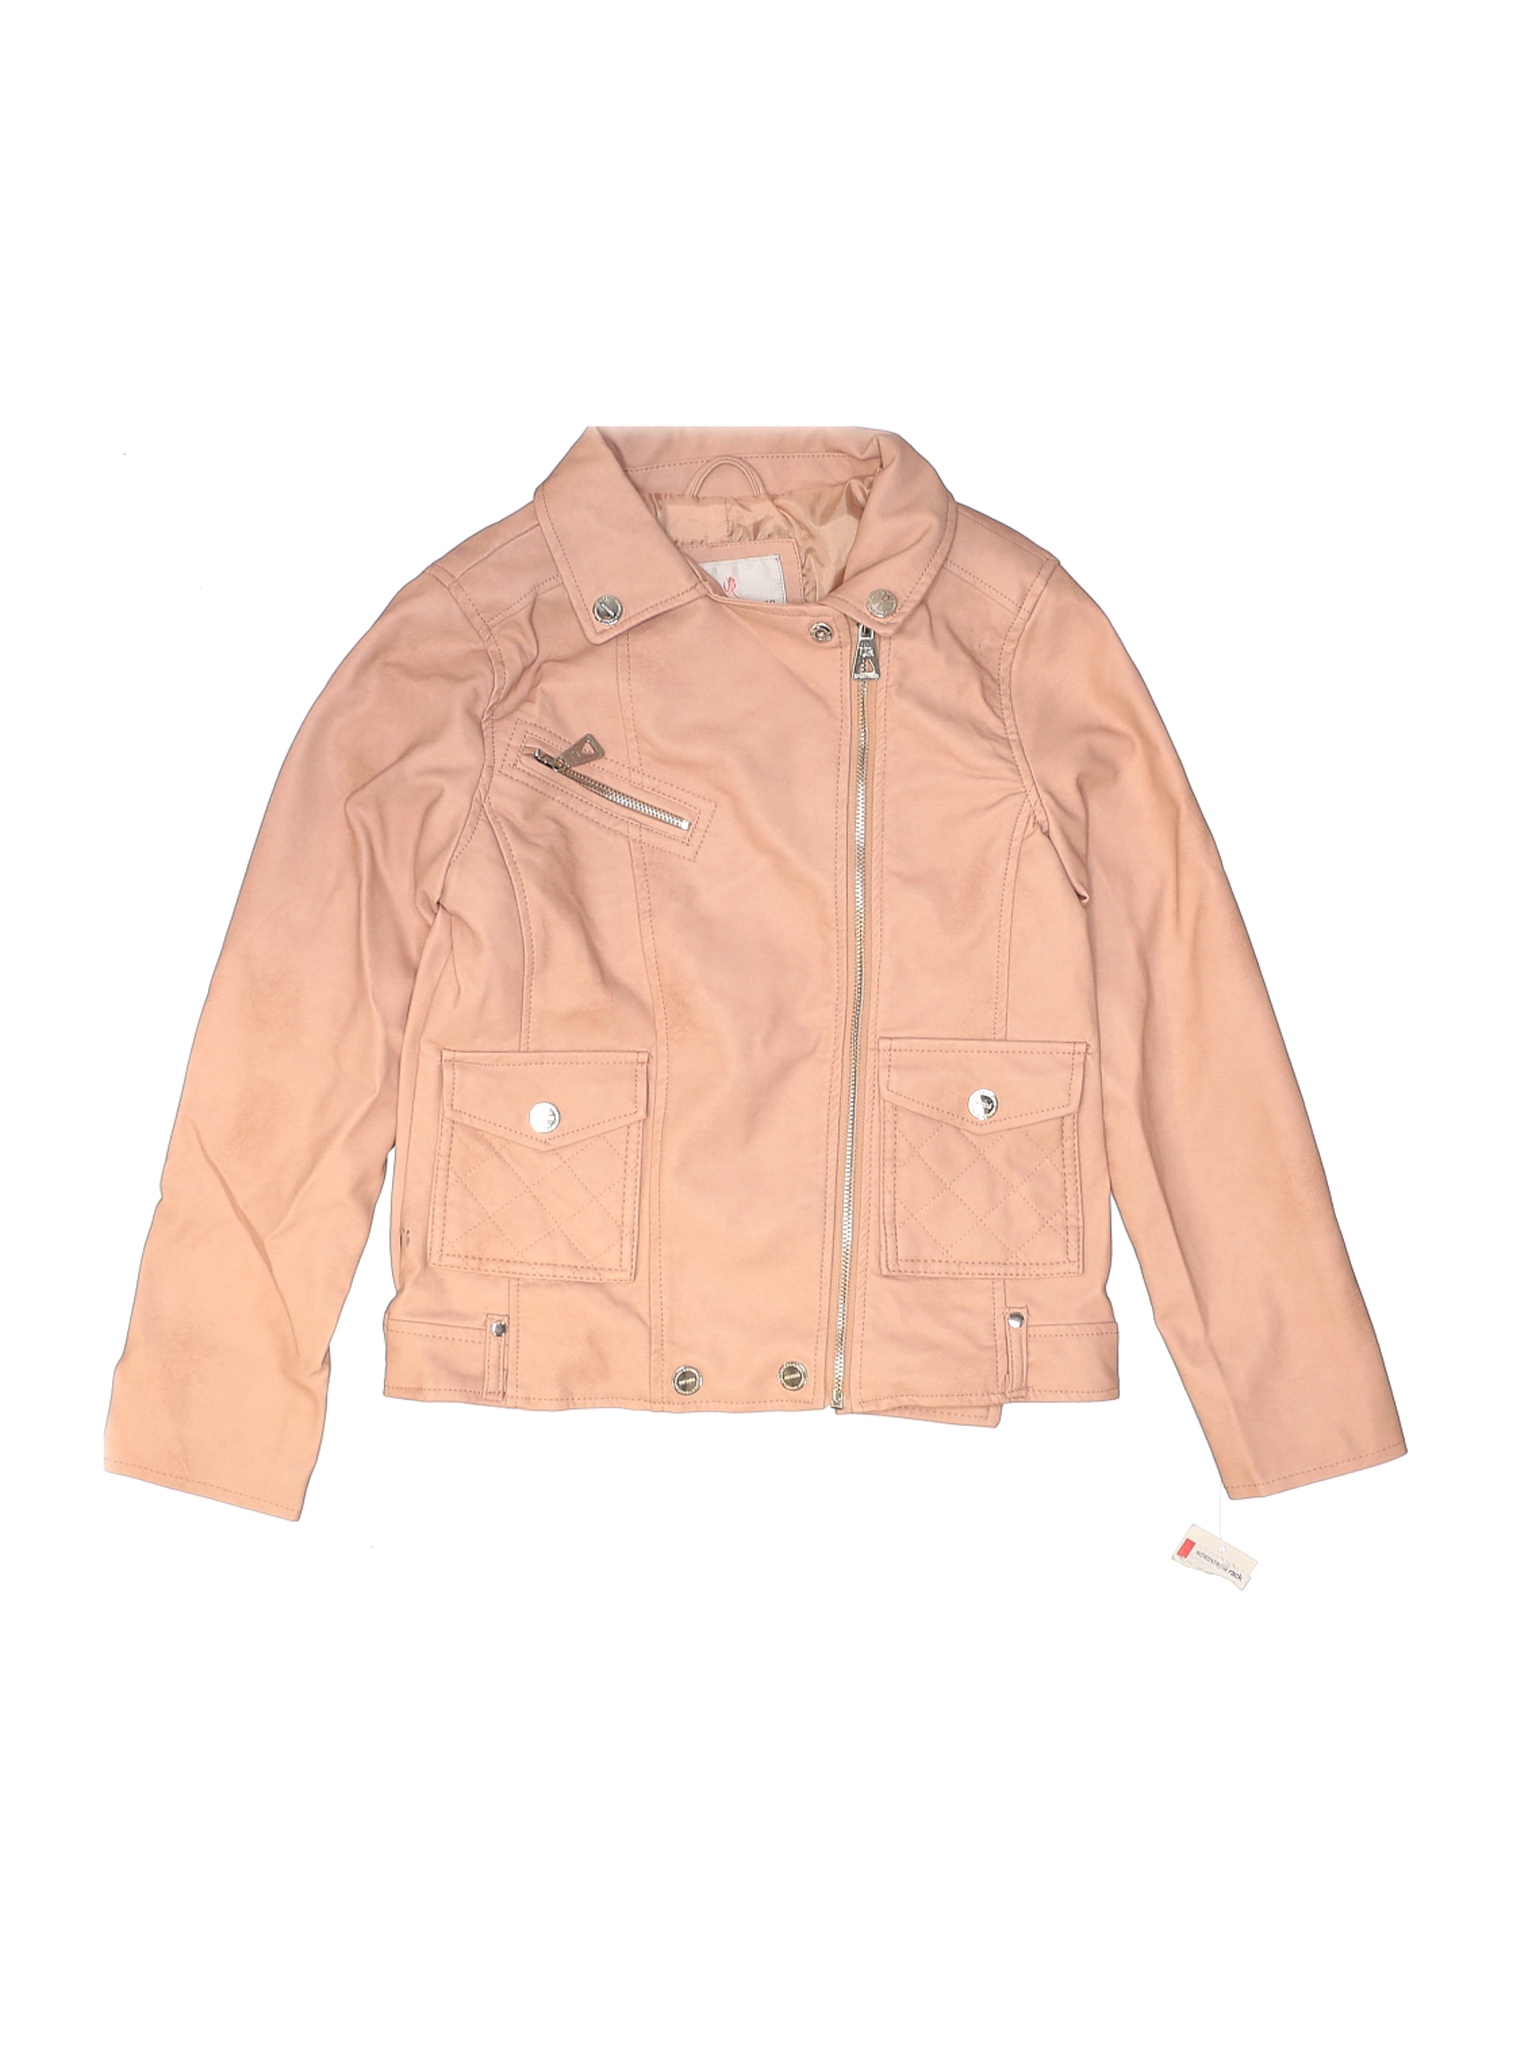 NWT Urban Republic Girls Pink Faux Leather Jacket 14 | eBay